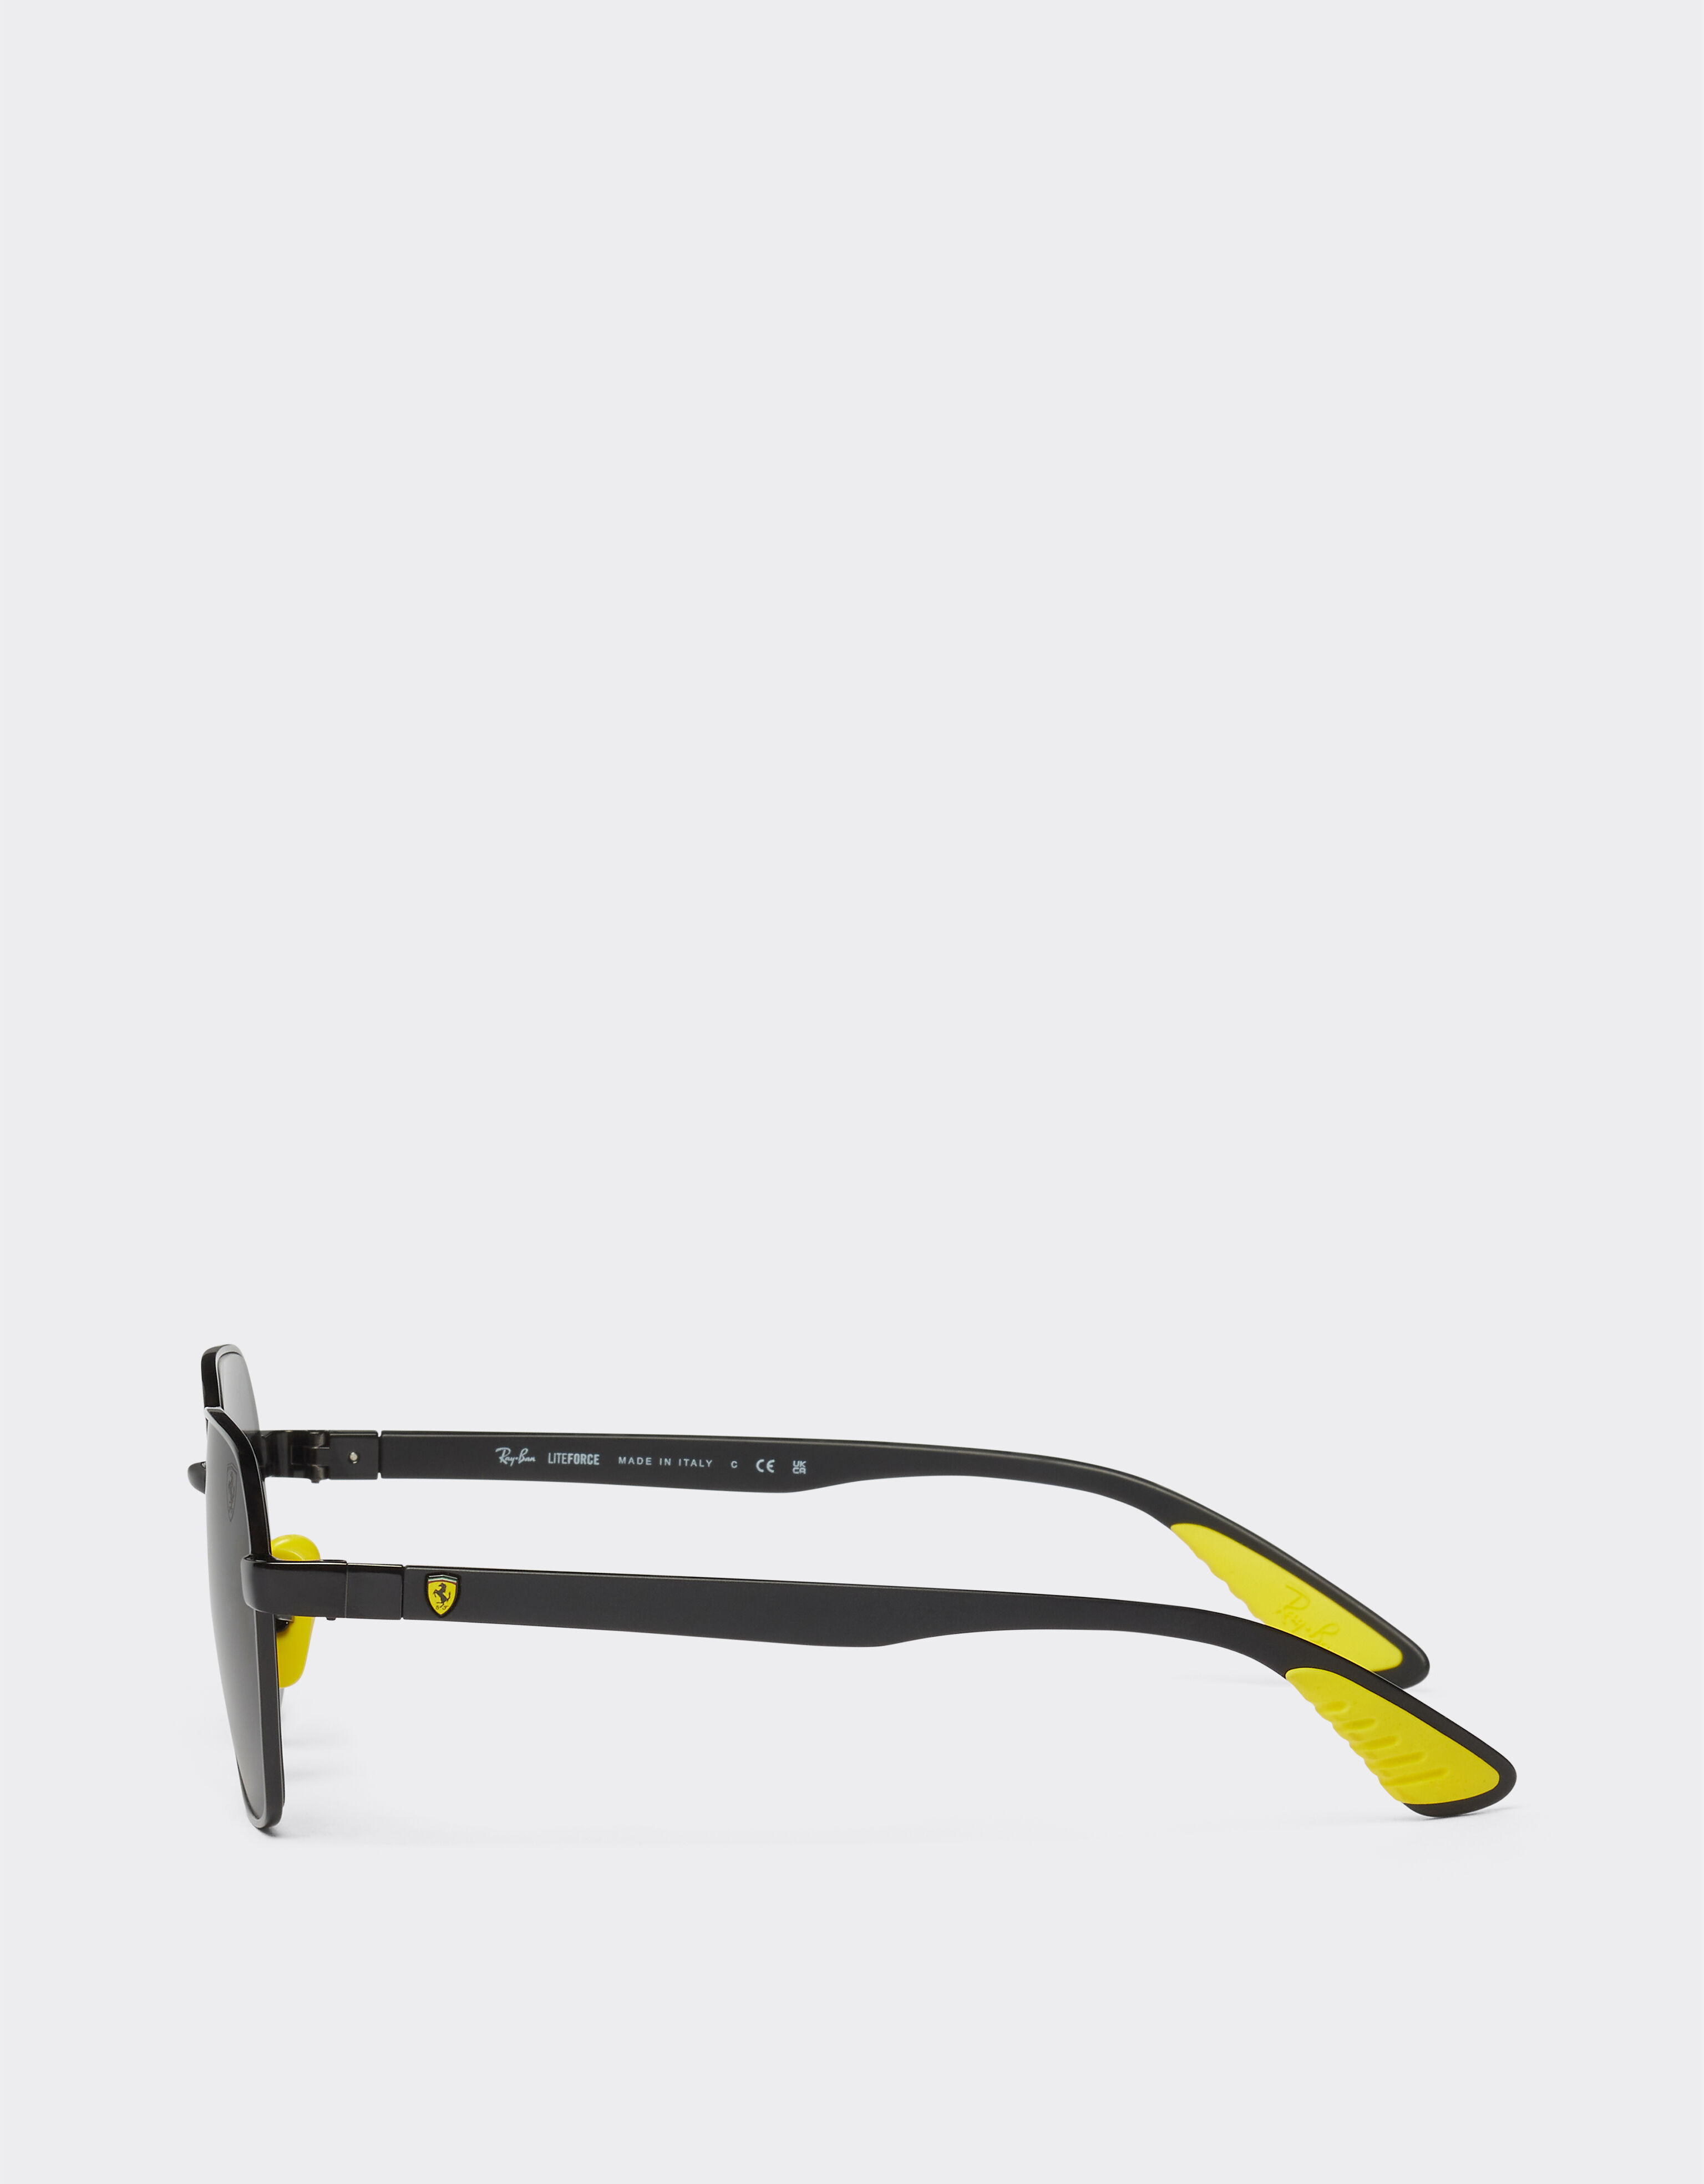 Ferrari Ray-Ban for Scuderia Ferrari 0RB3794M black metal sunglasses with grey lenses Black F1301f